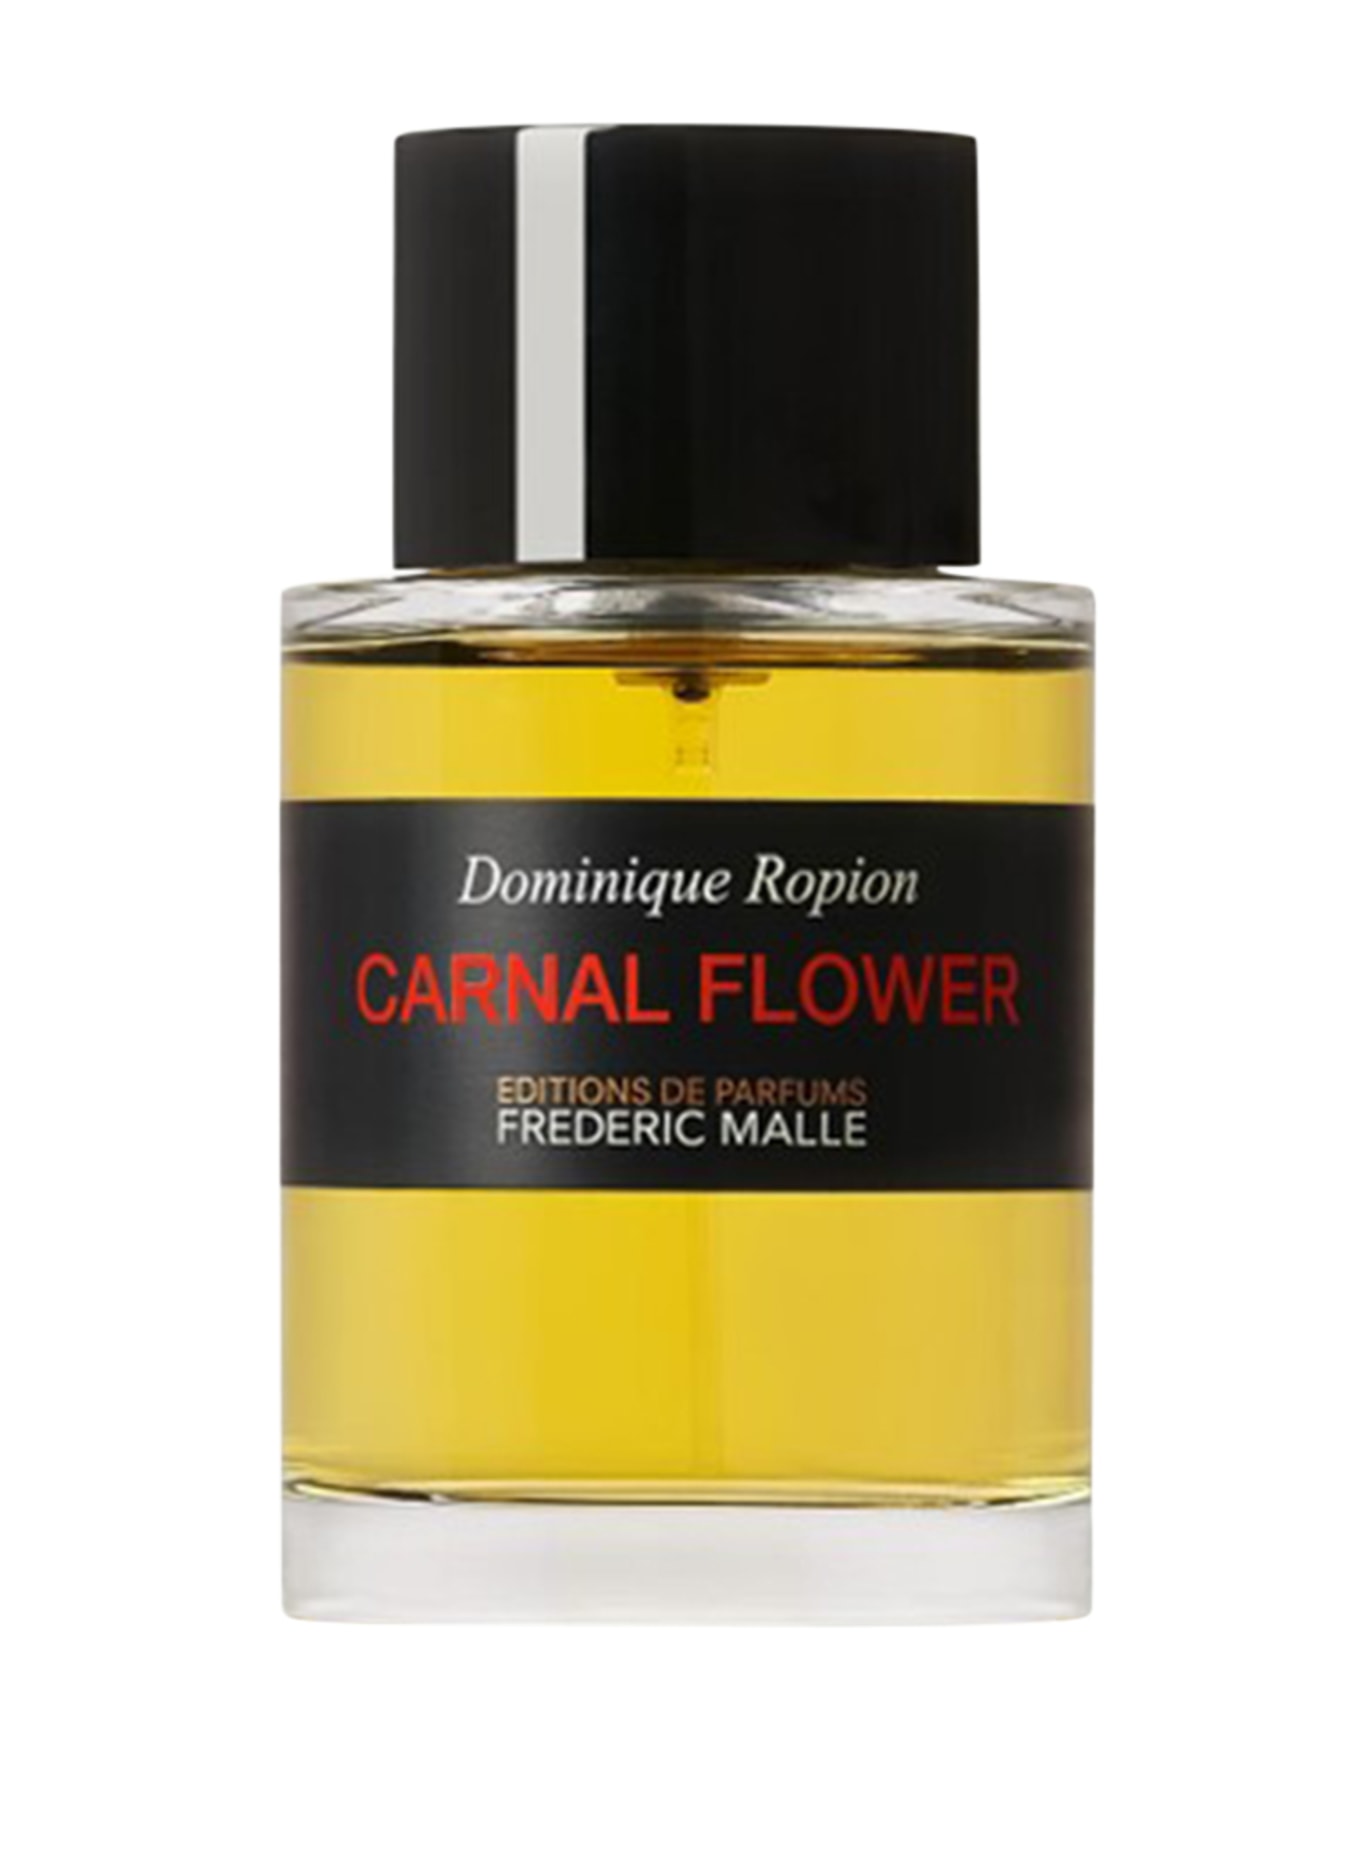 EDITIONS DE PARFUMS FREDERIC MALLE CARNAL FLOWER (Obrázek 1)